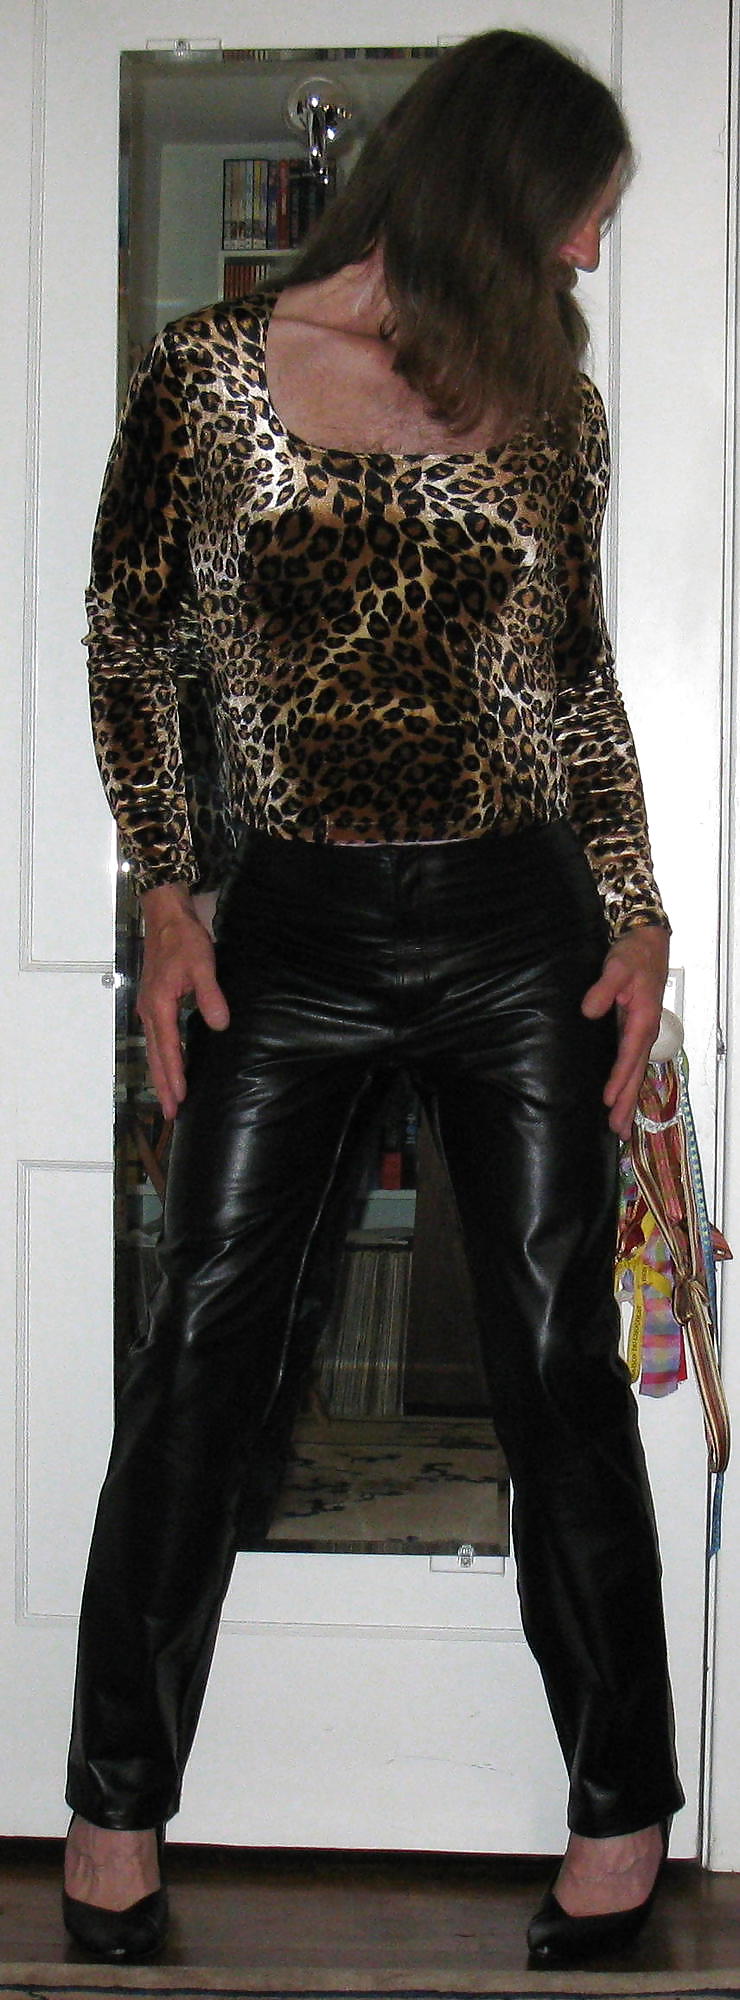 Crossdressing - ragazza leopardo
 #7202312